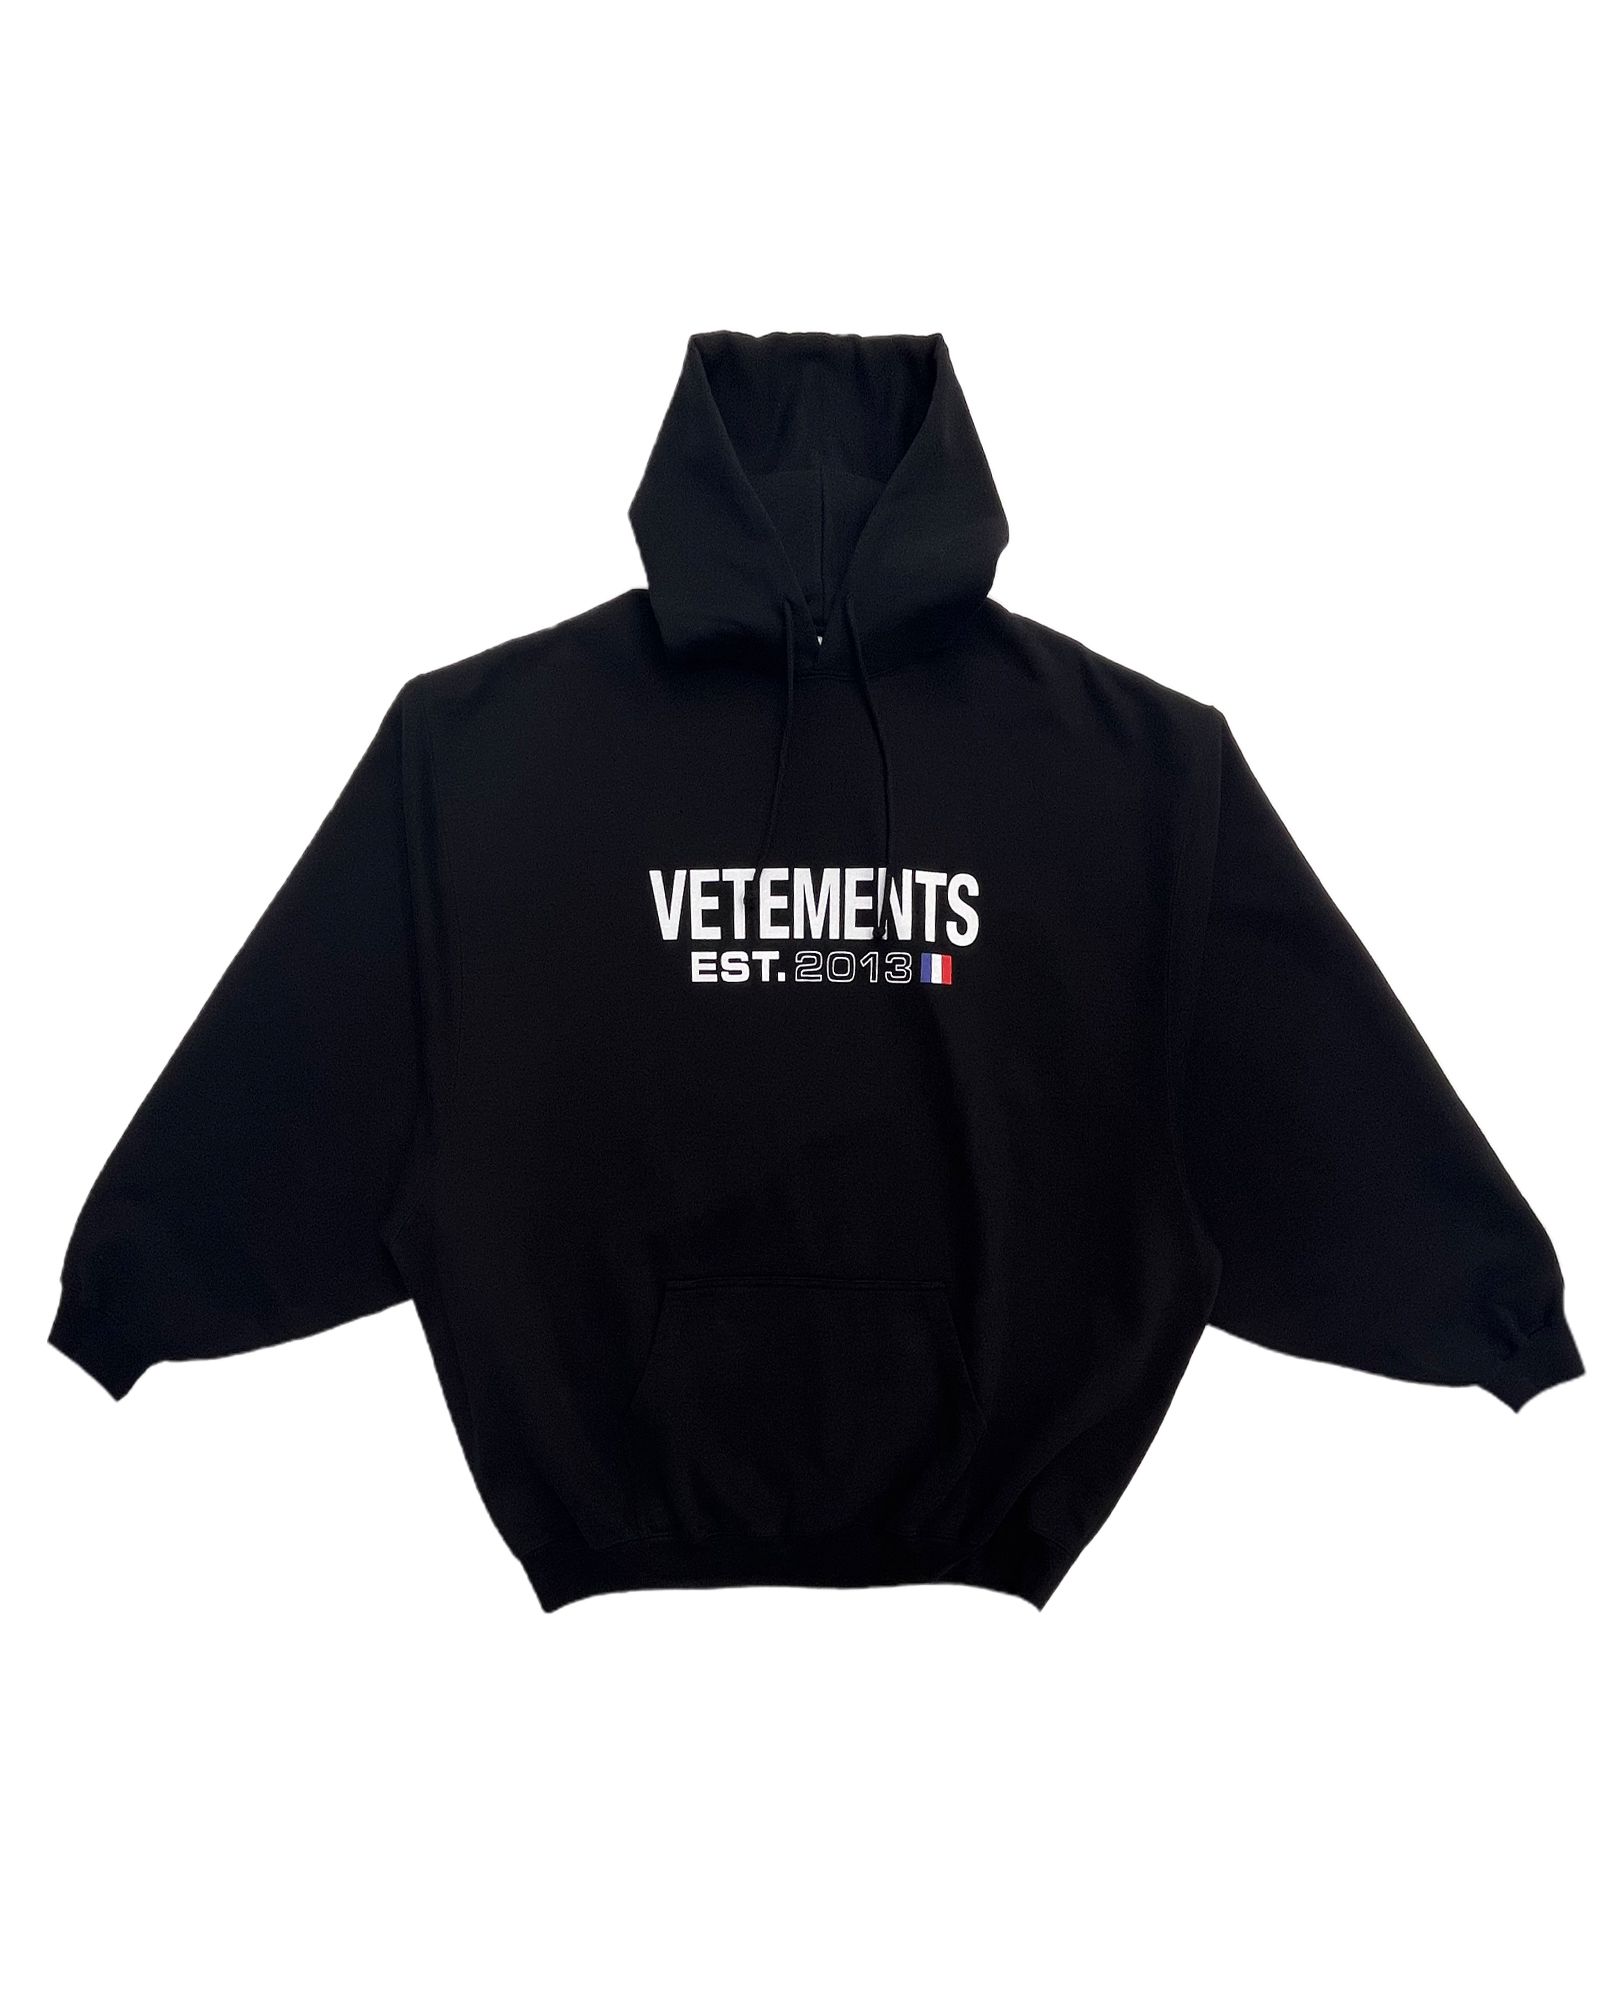 VETEMENTS - Vetements paris logo hoodie (プルオーバーパーカー) Red